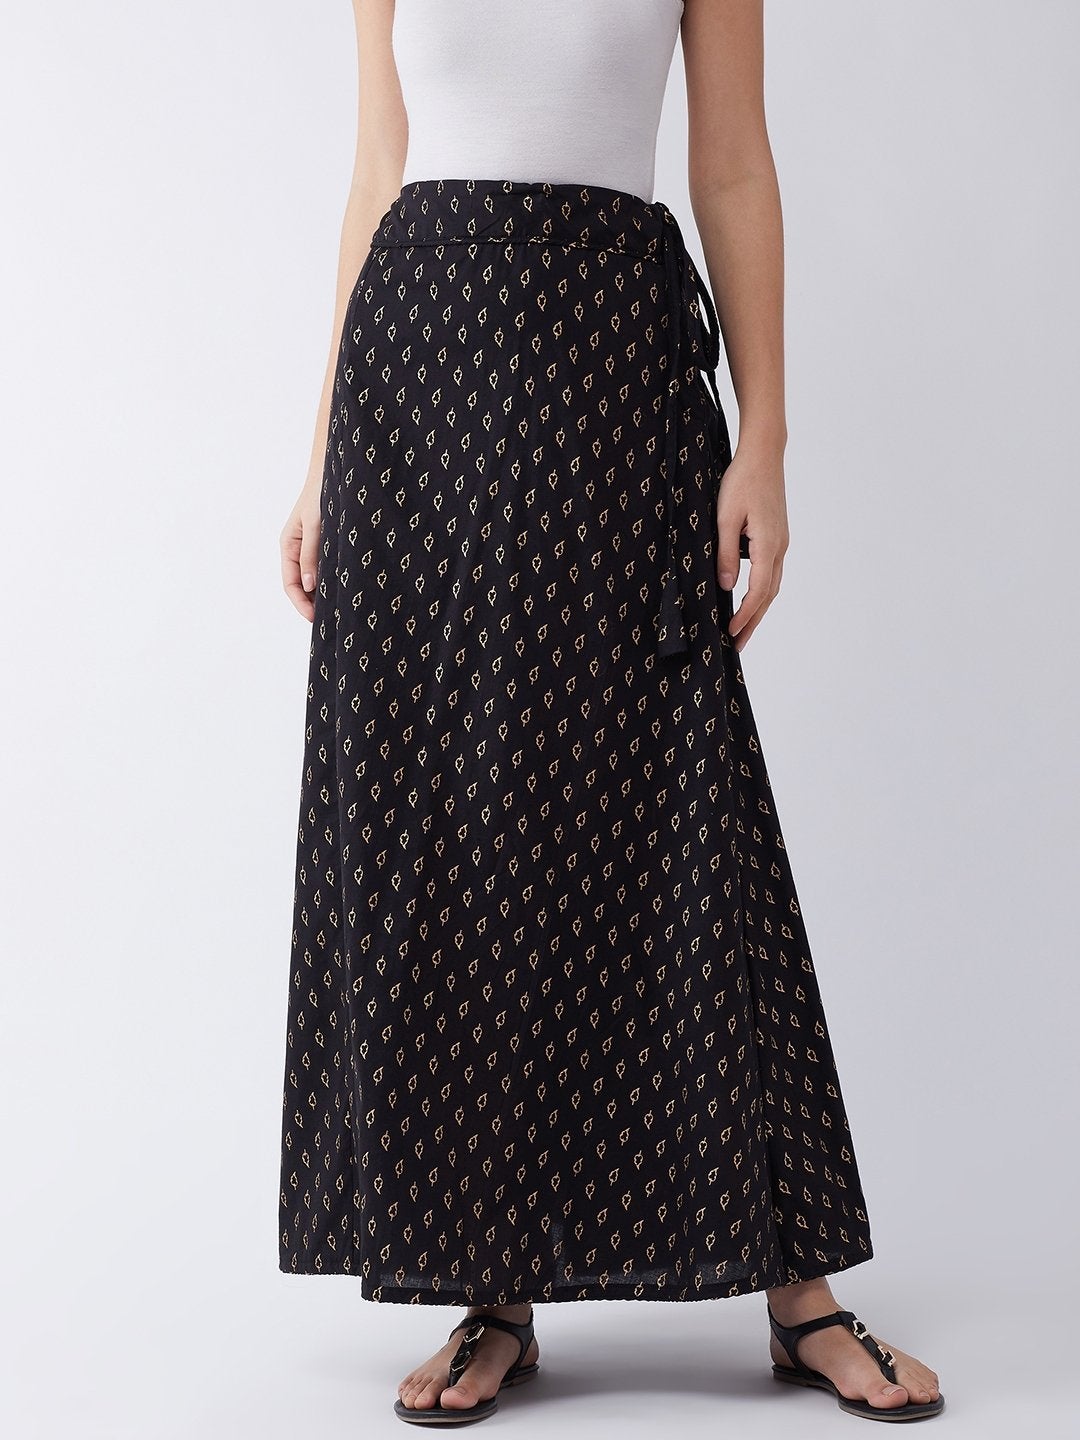 Women's Black Gold Leaf Print Skirt - InWeave